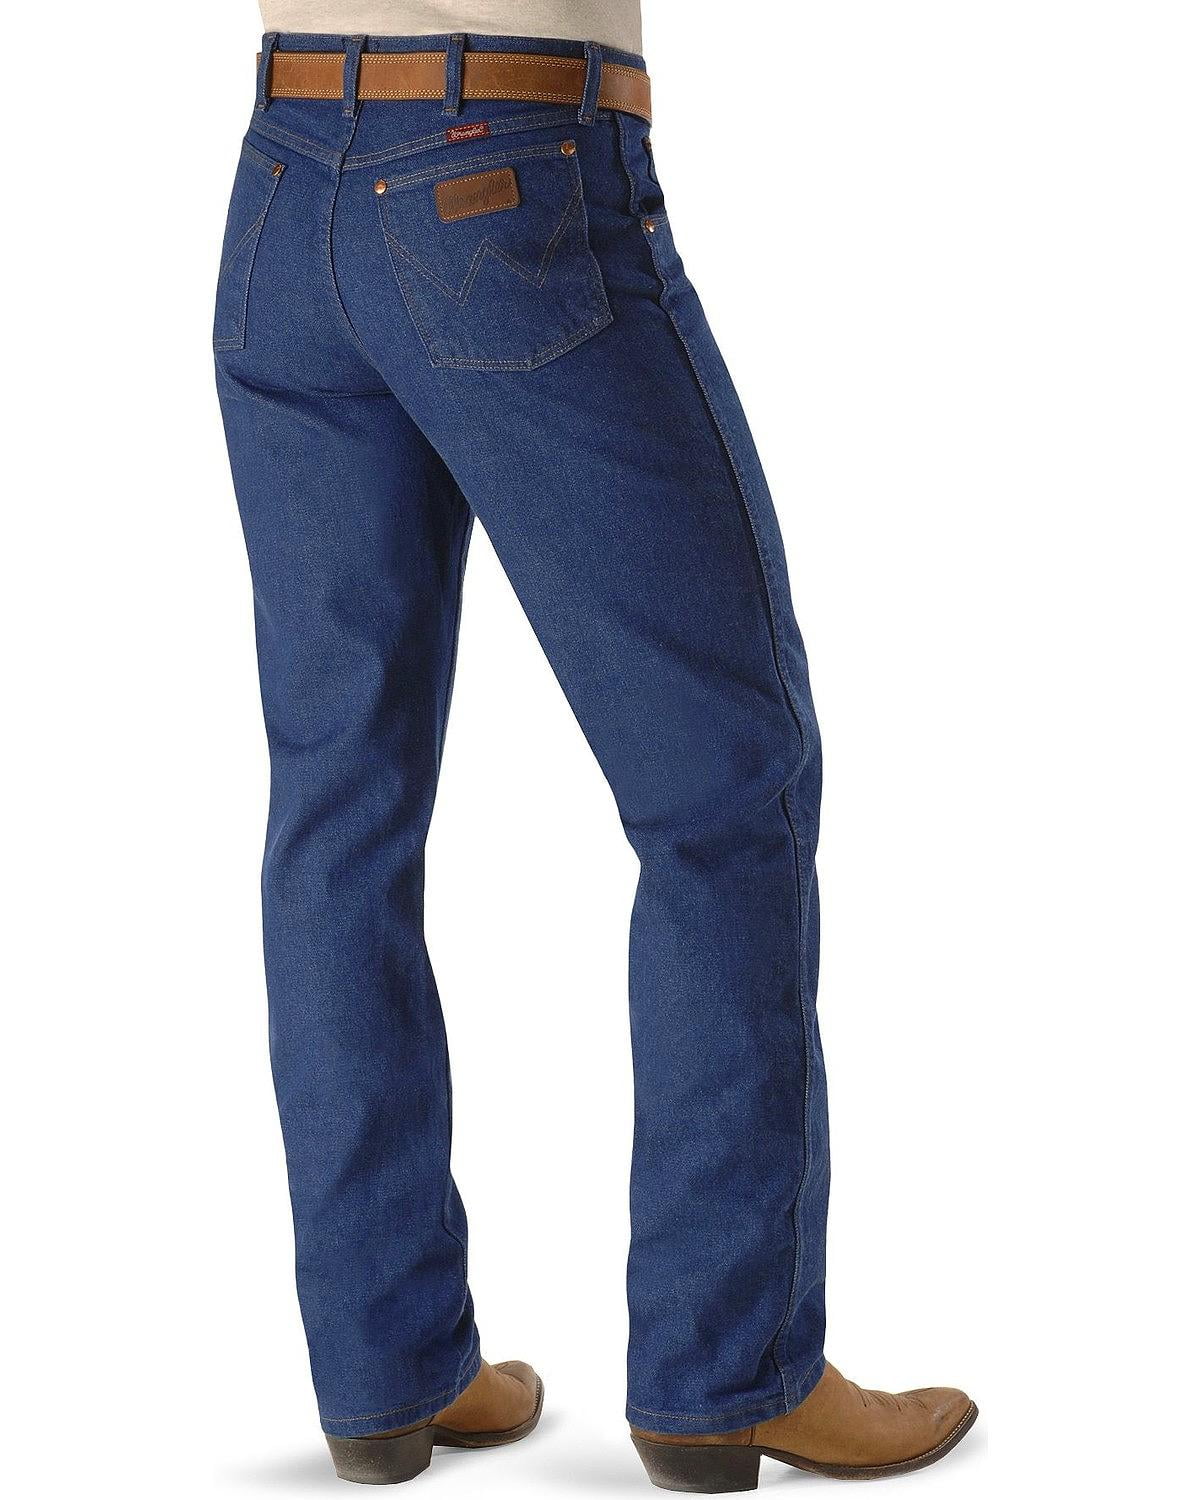 wrangler men's jeans 31mwz relaxed fit prewashed denim - 31mwzpw_x7 ...